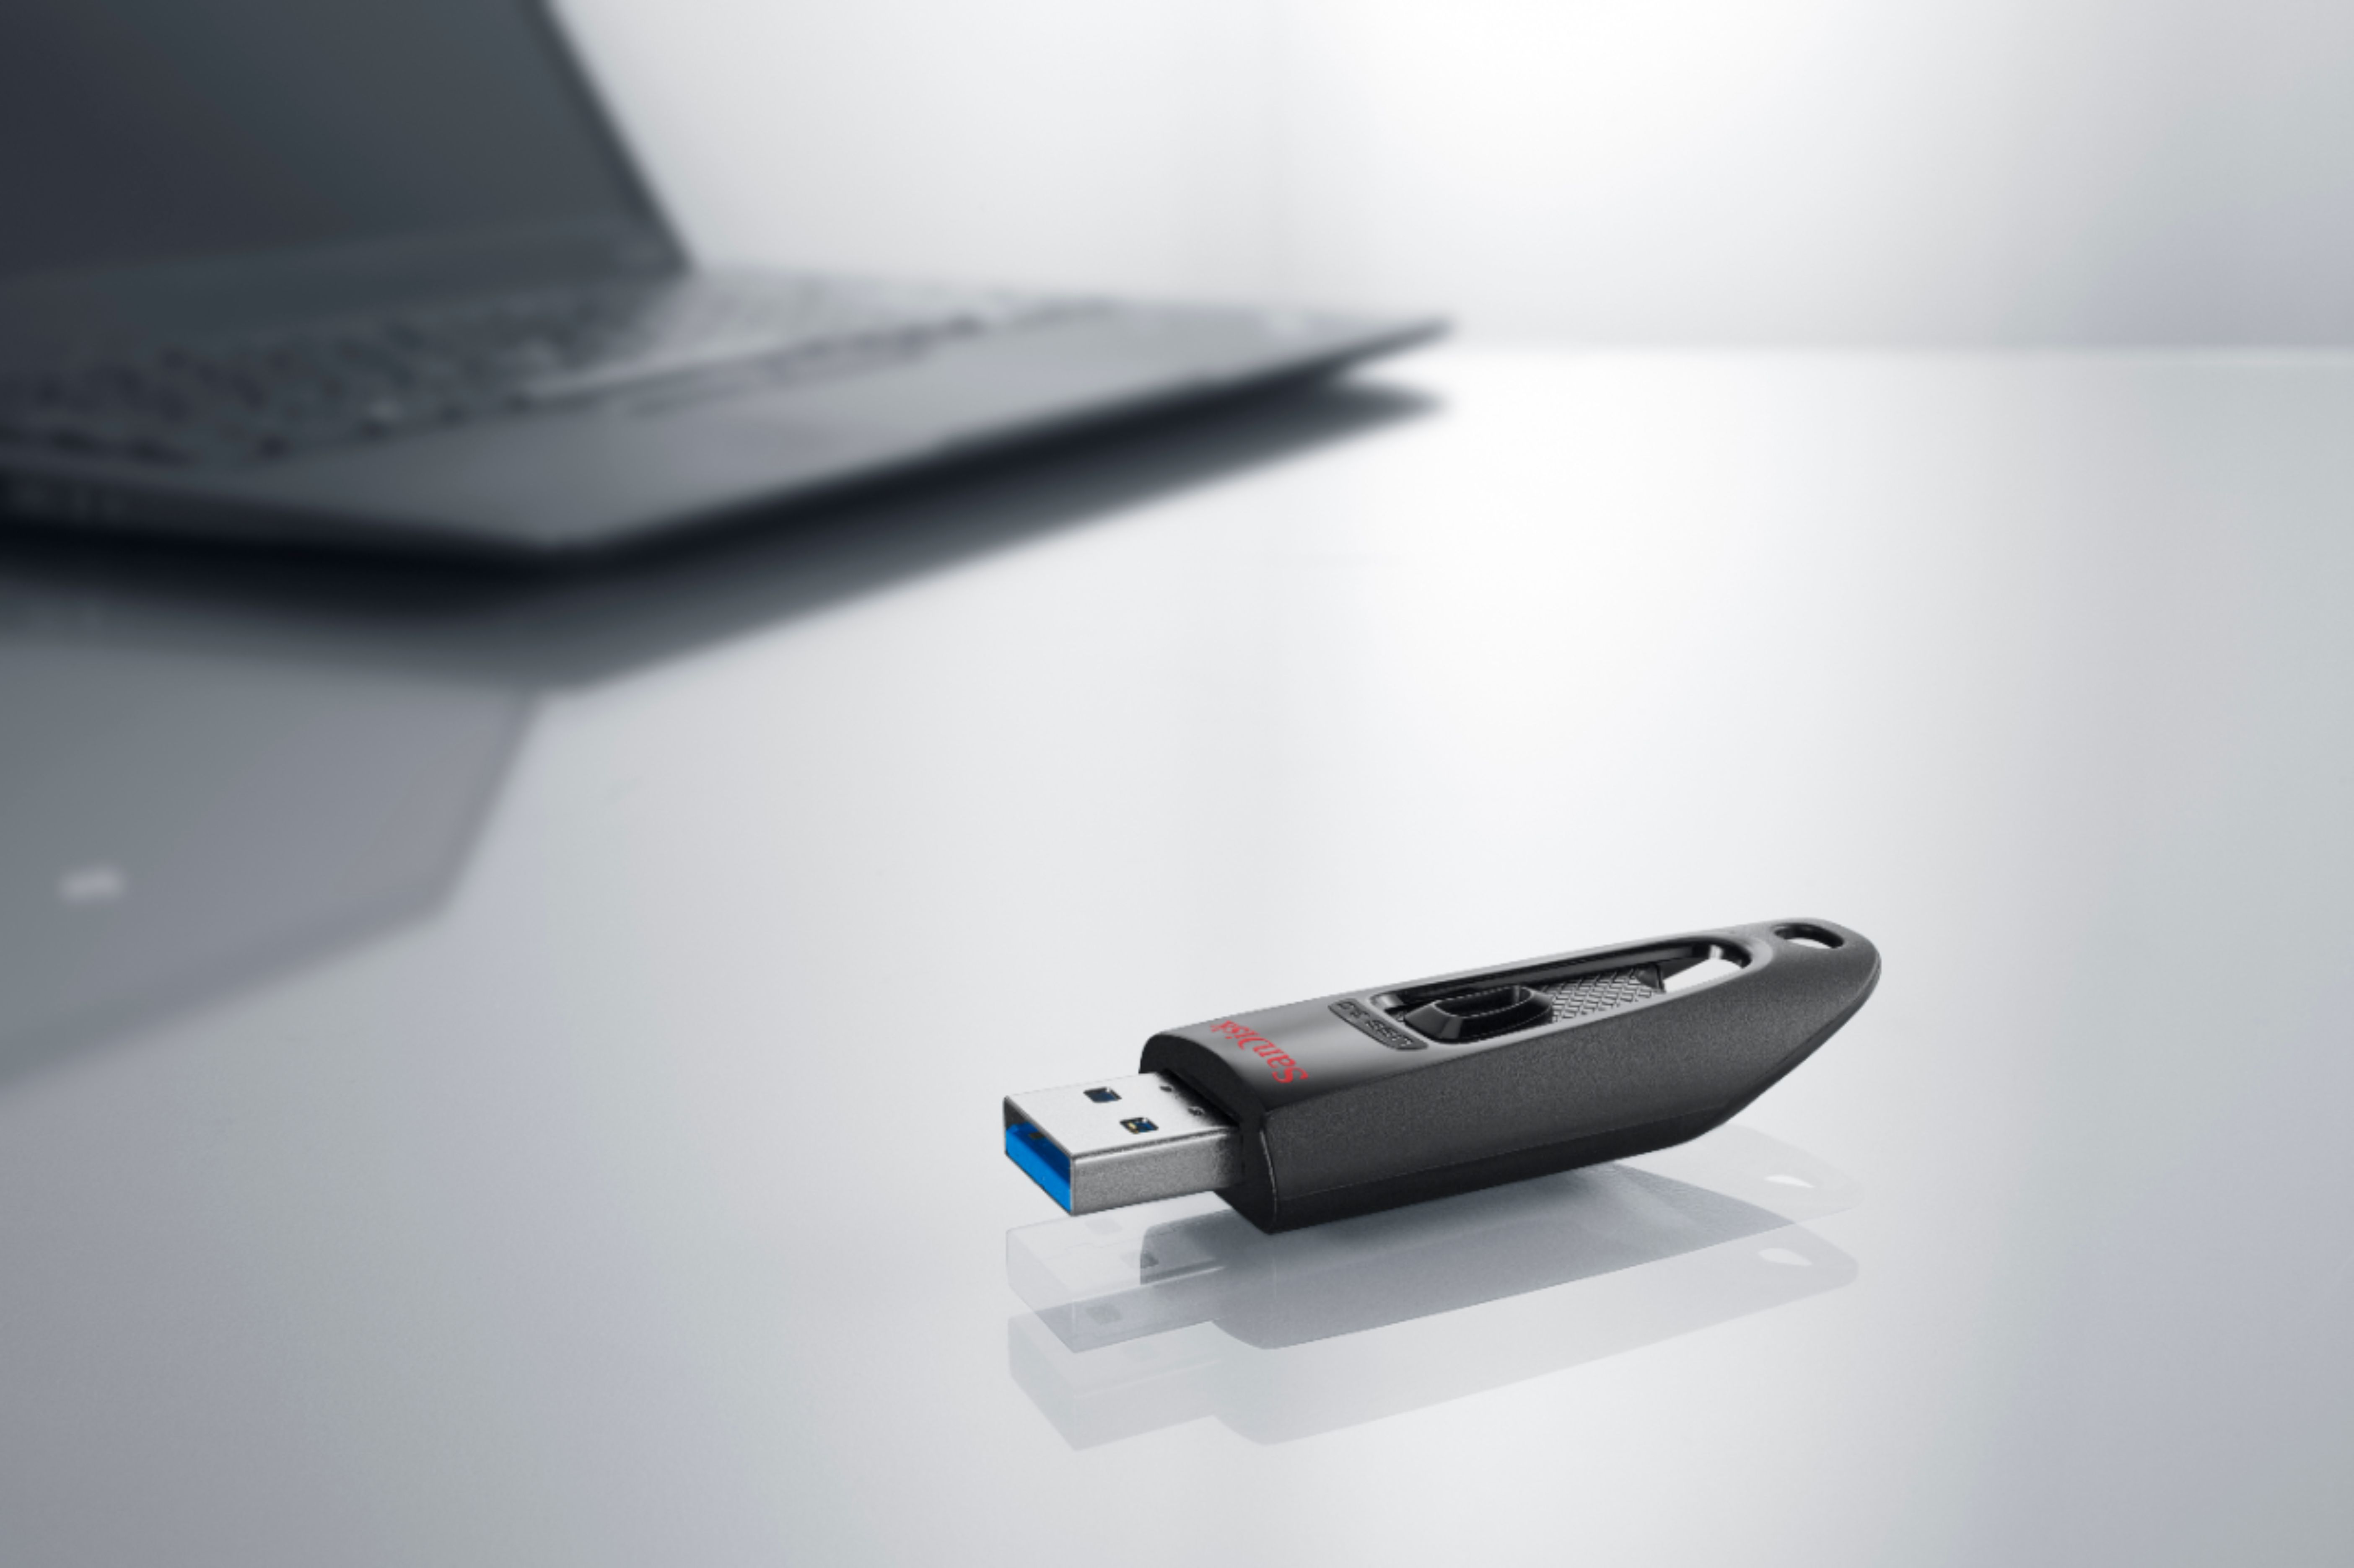 USB Flash Drives: 4GB to 128GB Flash Drives - Best Buy